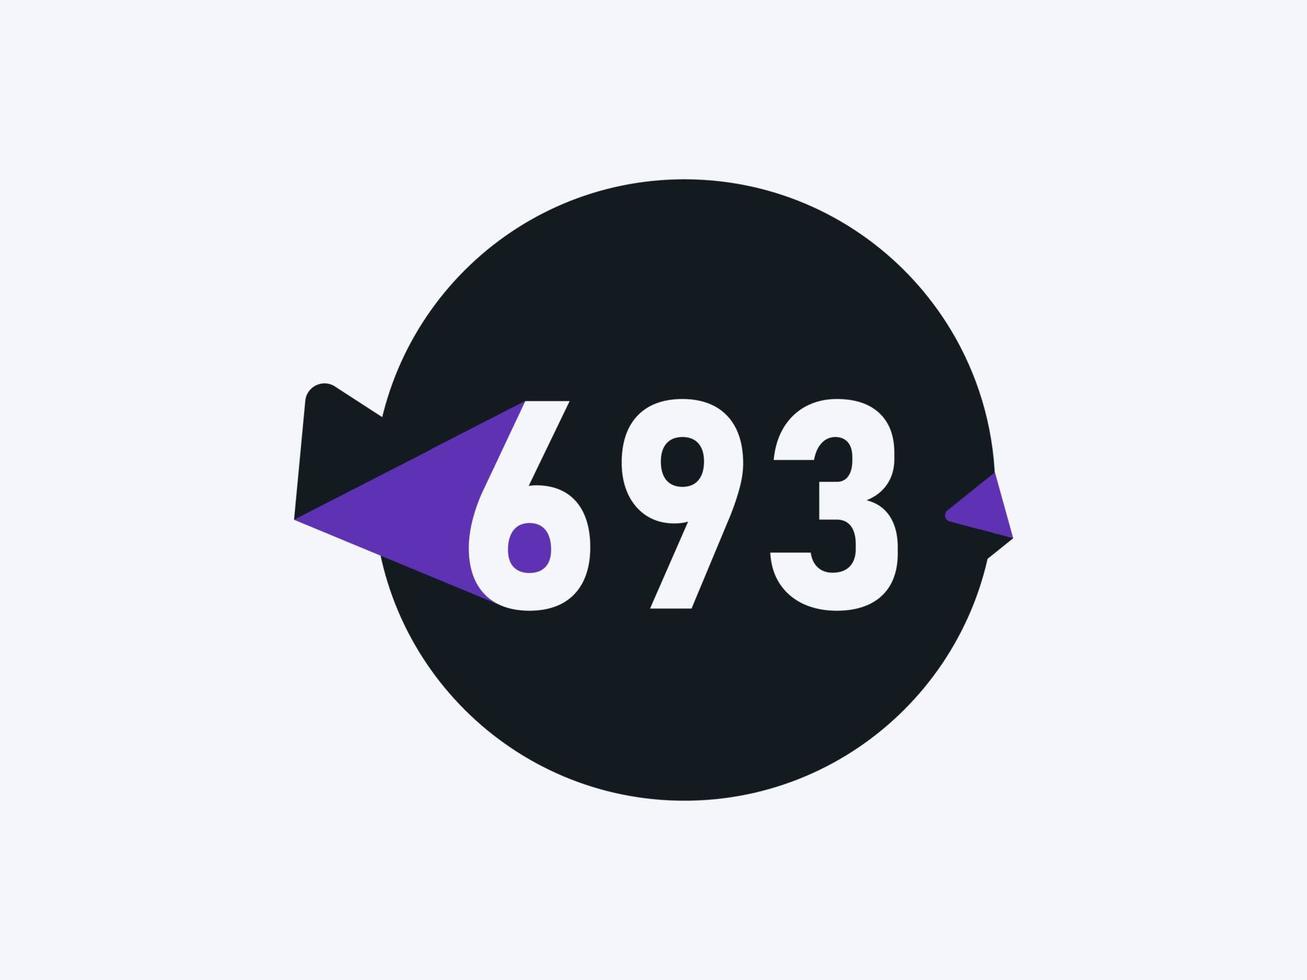 693 Number logo icon design vector image. Number logo icon design vector image